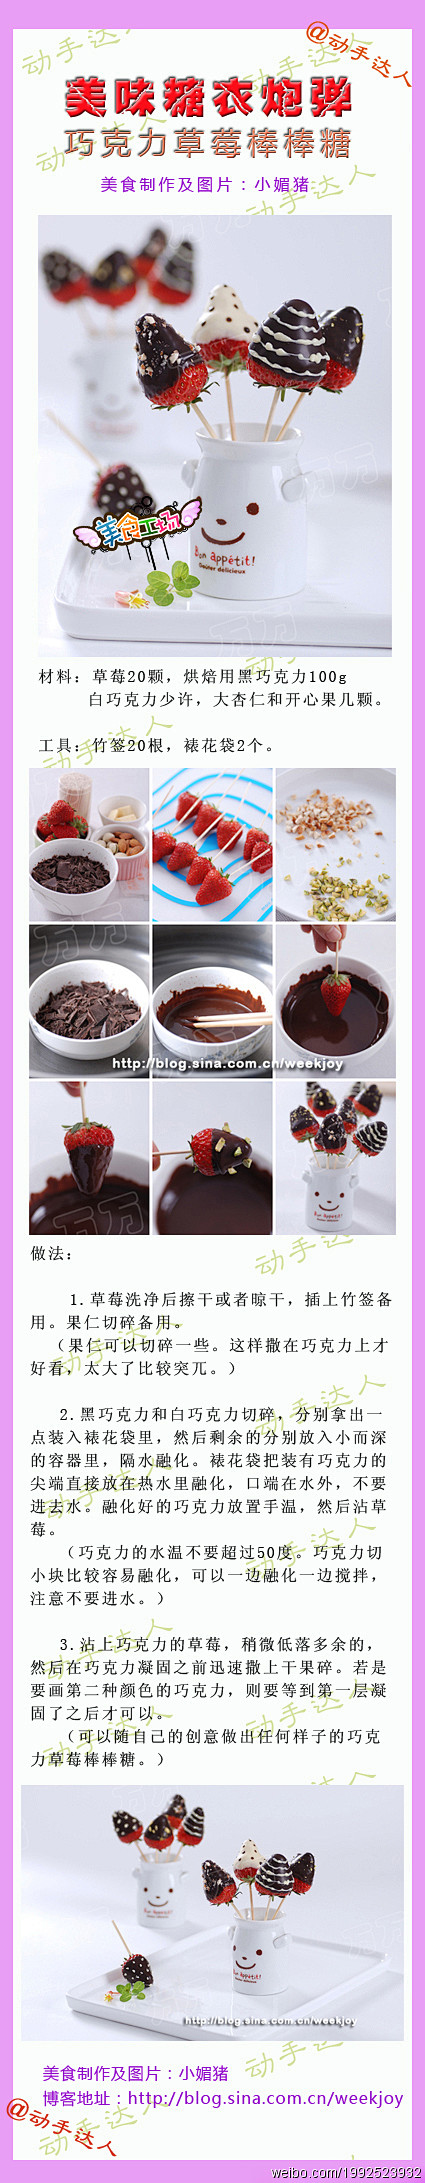 【DIY巧克力草莓棒棒糖】
xlx